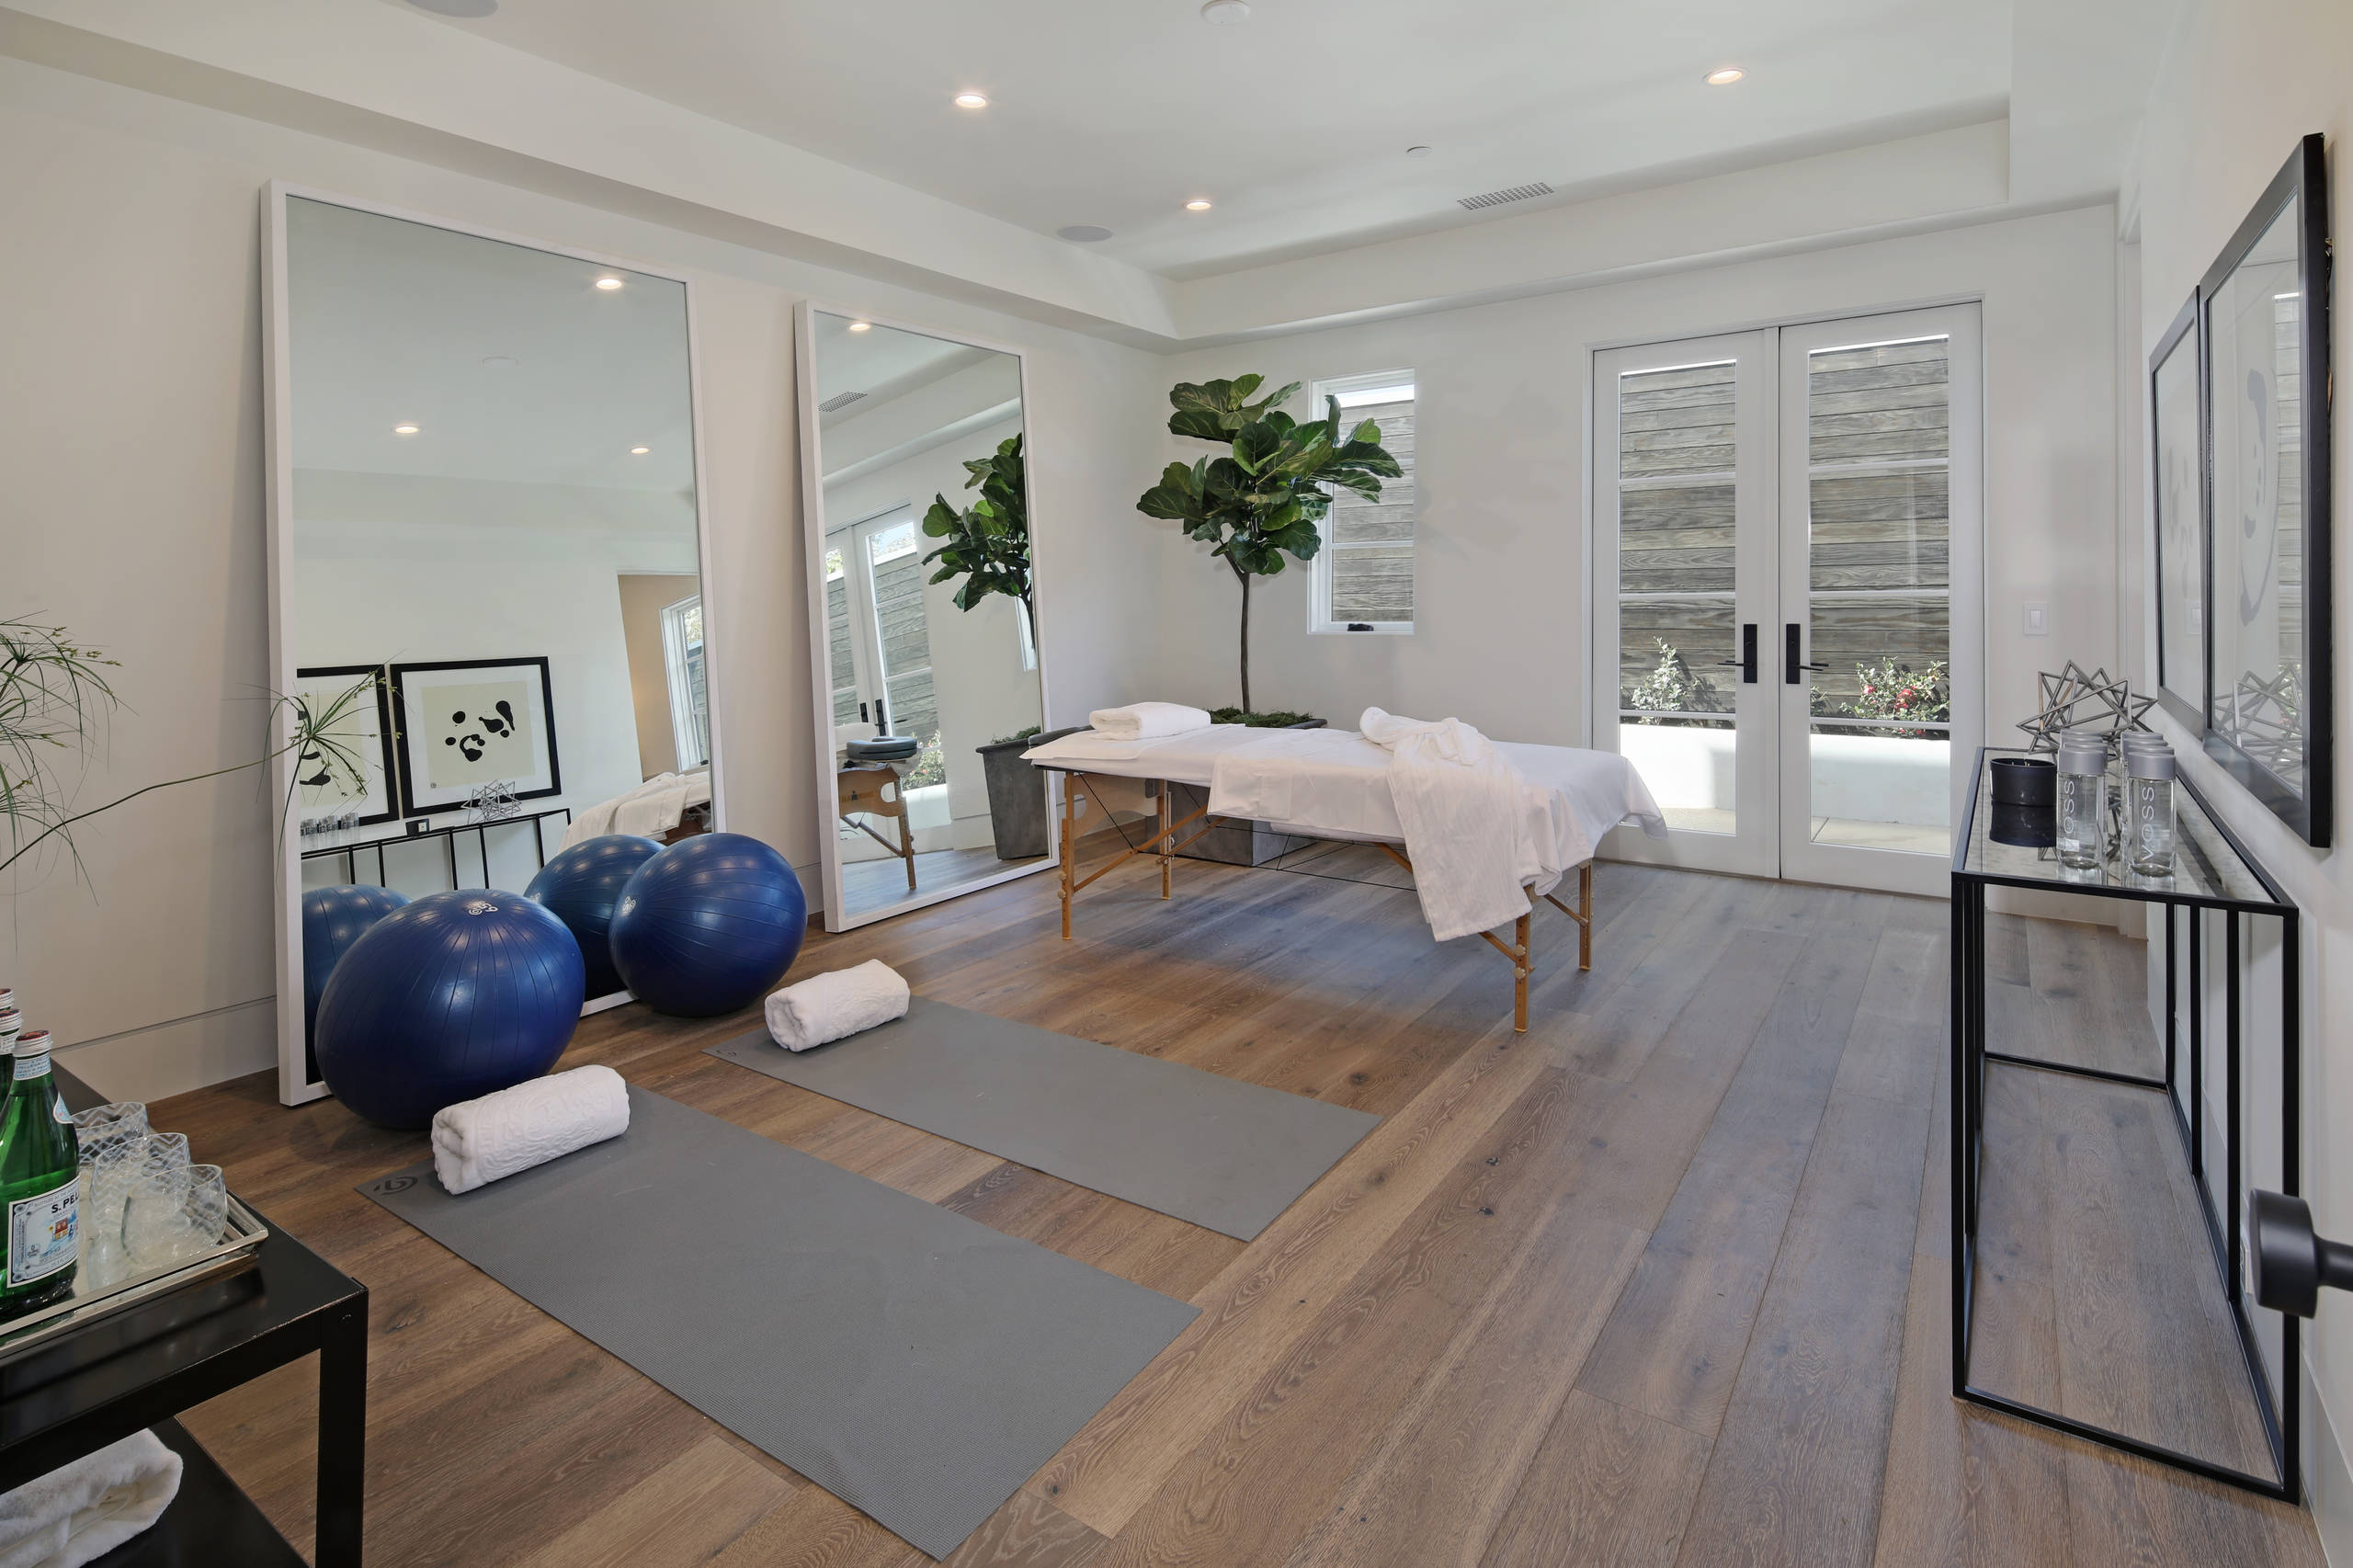 80 Yoga Studio Design Tips (Home or Business)  Yoga studio design, Hot  yoga studio, Yoga studio home